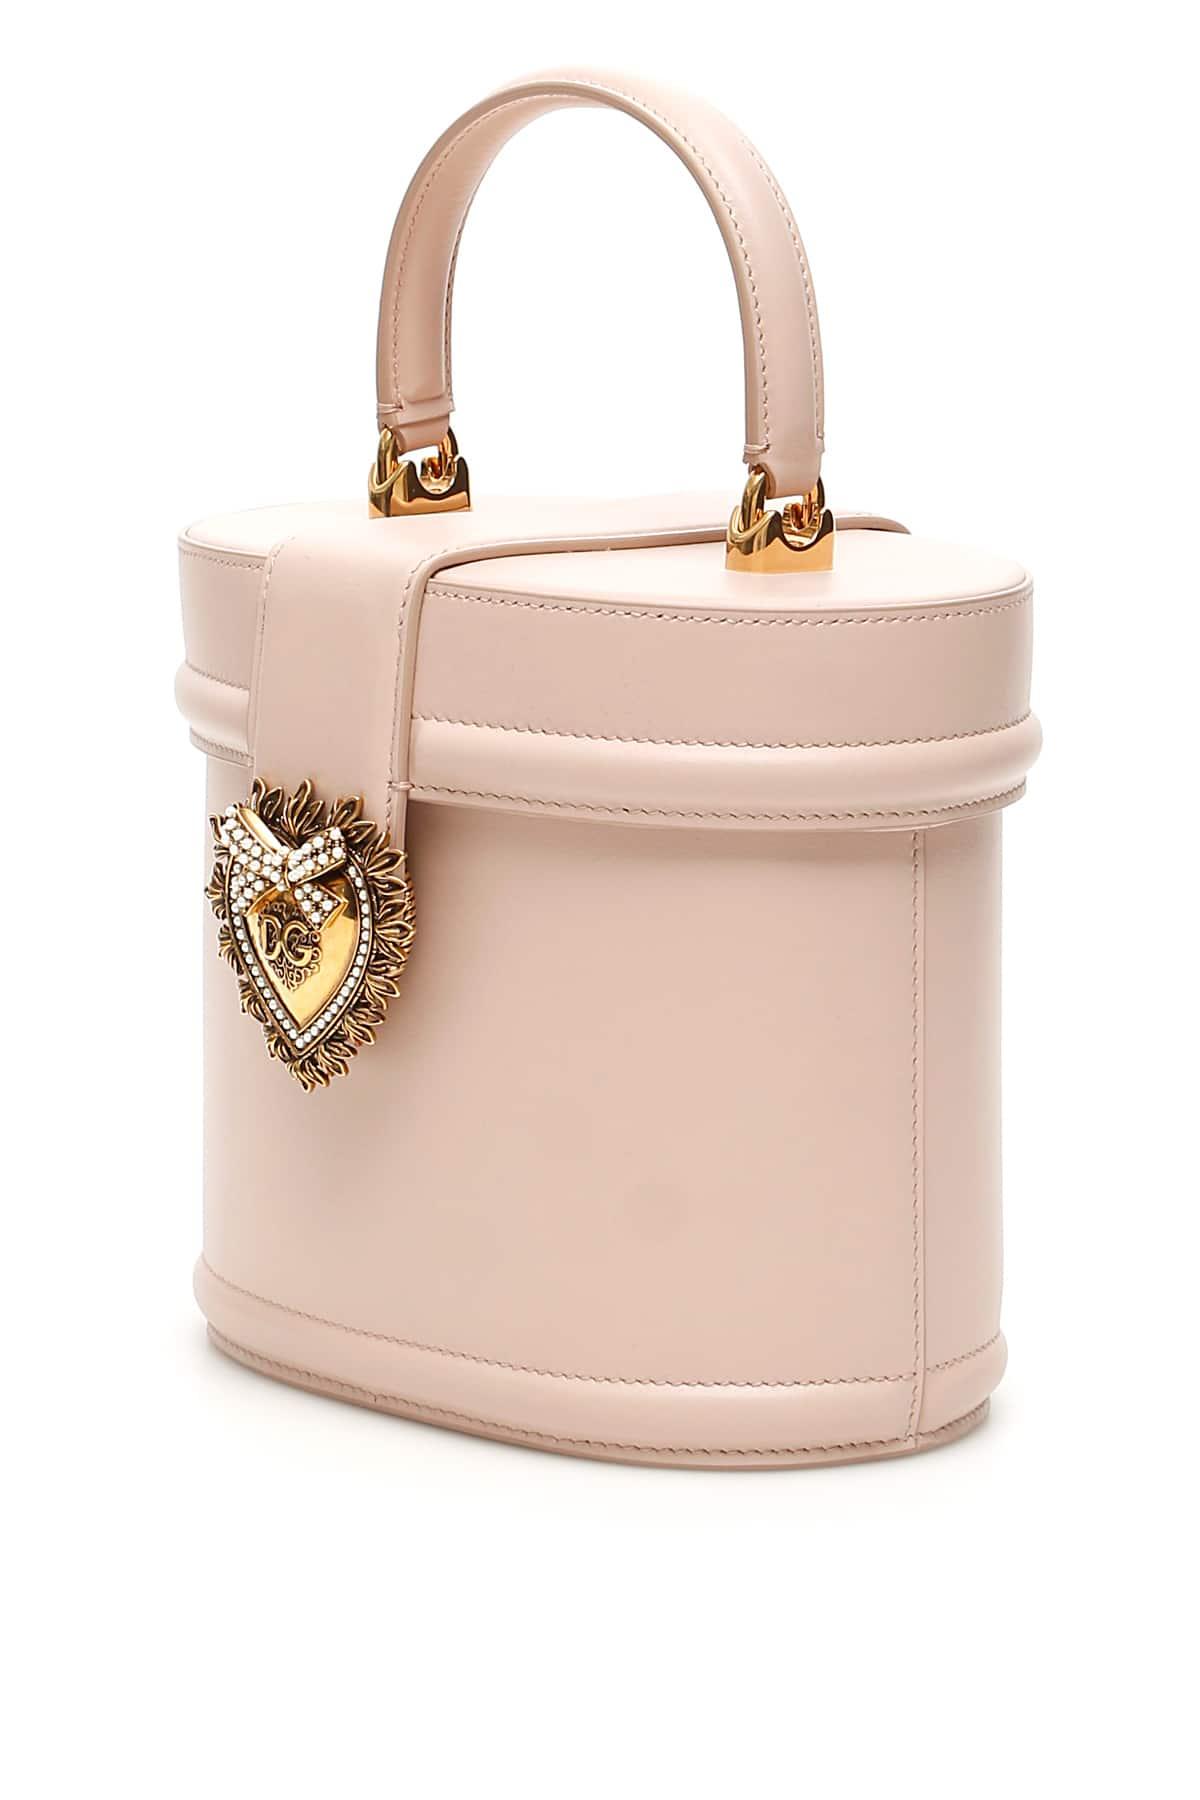 Dolce & Gabbana Oval Devotion Bag in Pink | Lyst